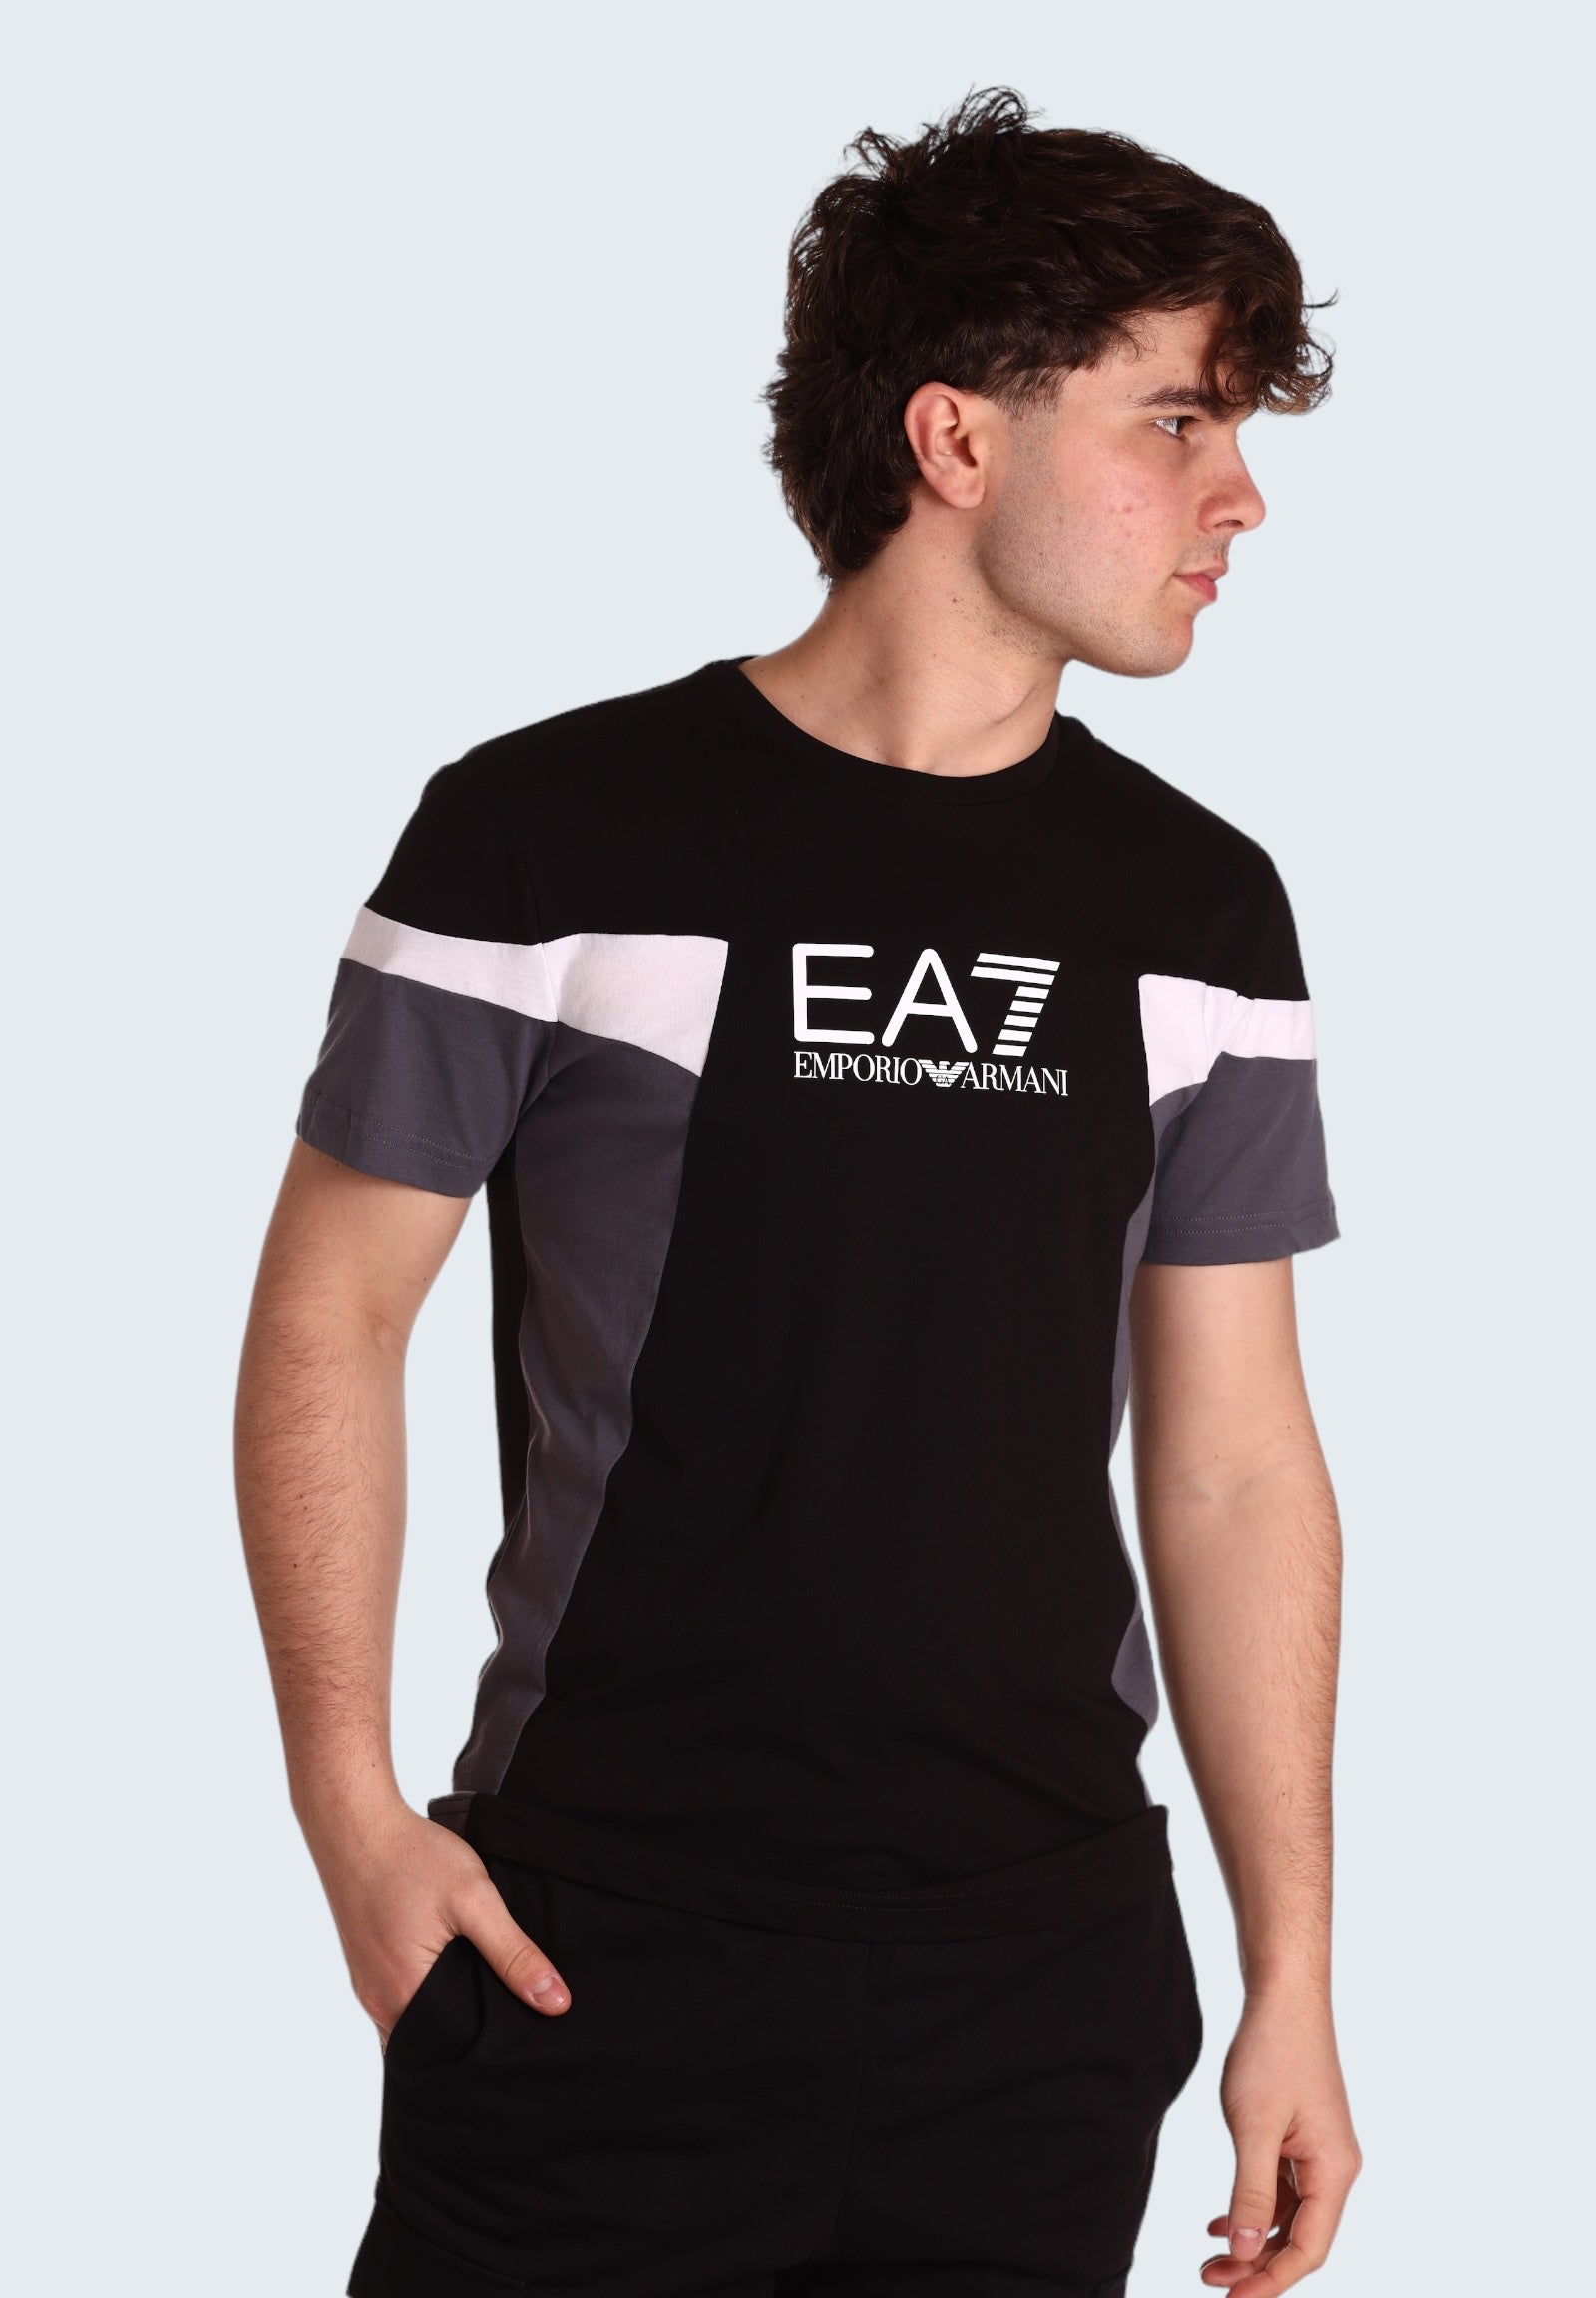 Ea7 Emporio Armani T-Shirt* 3dpt10 Black